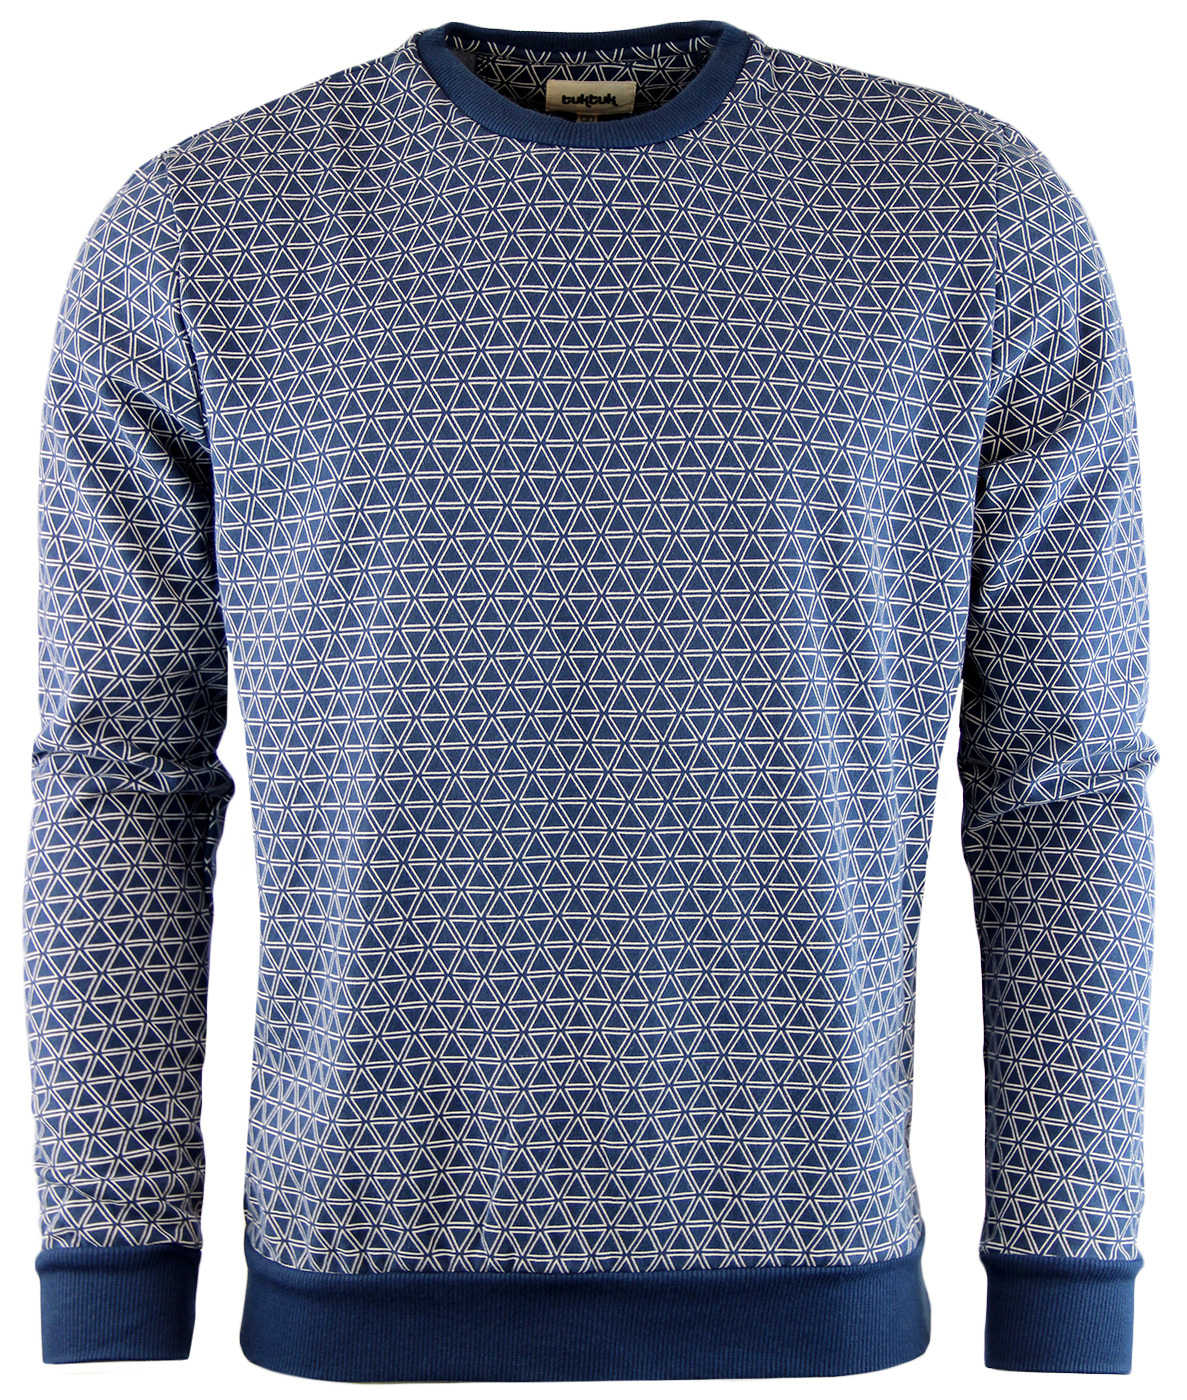 TUKTUK Retro Indie 60s Geometric Triangle Sweater